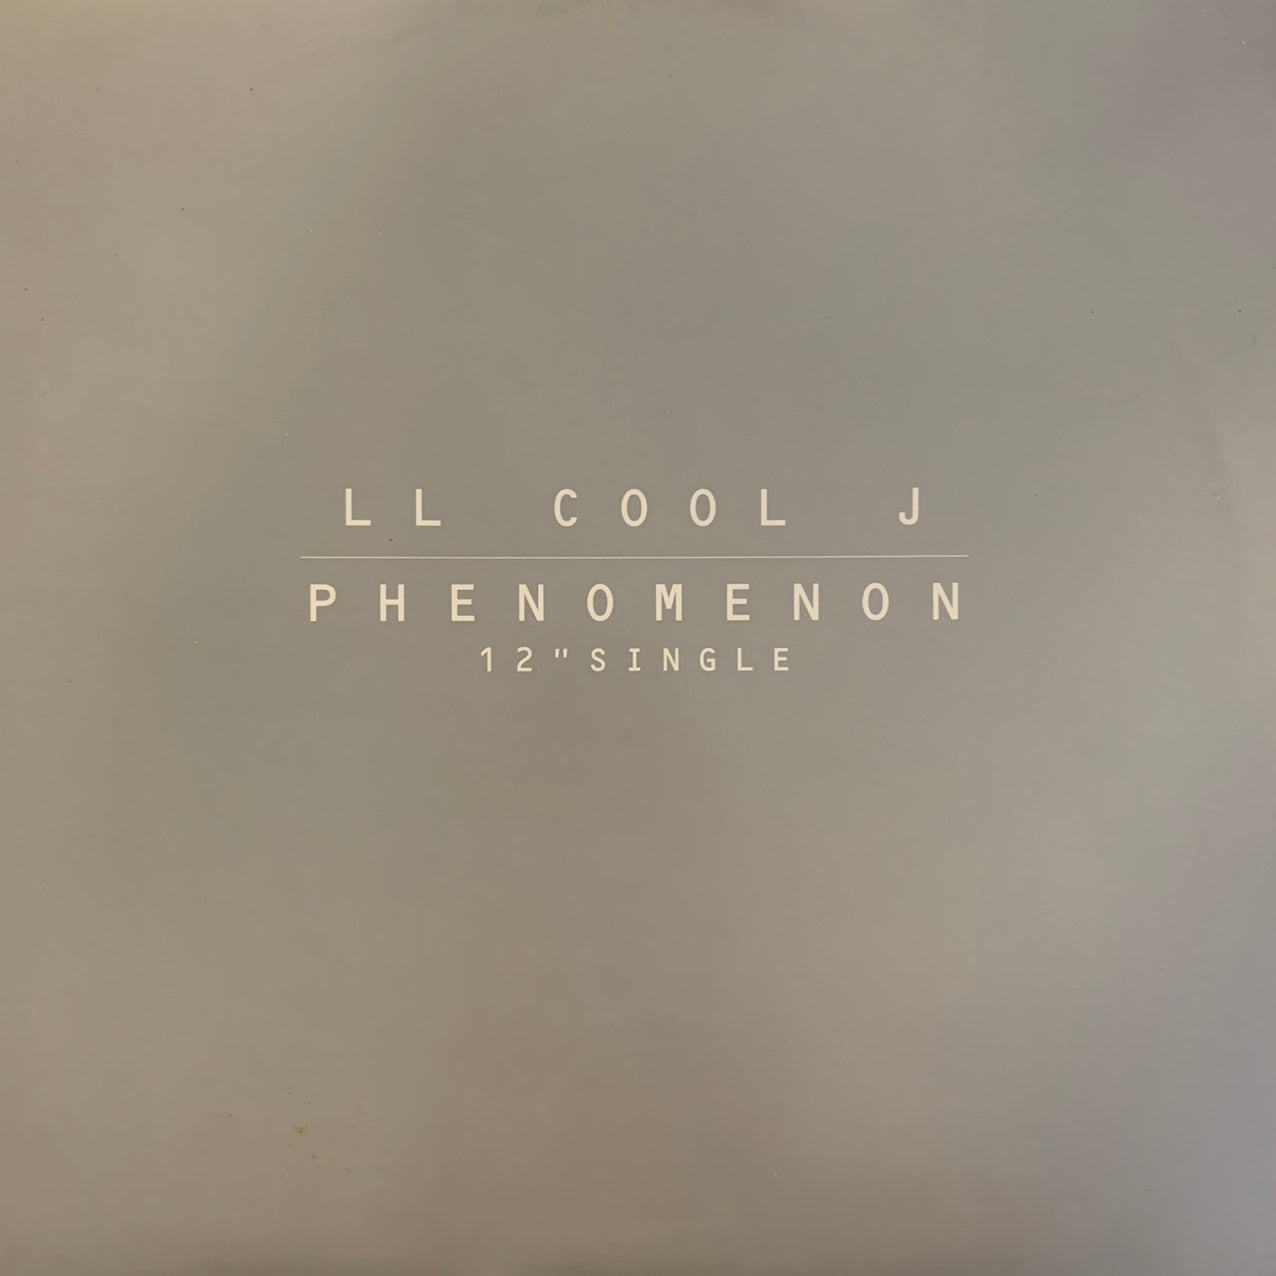 ll cool j phenomenon